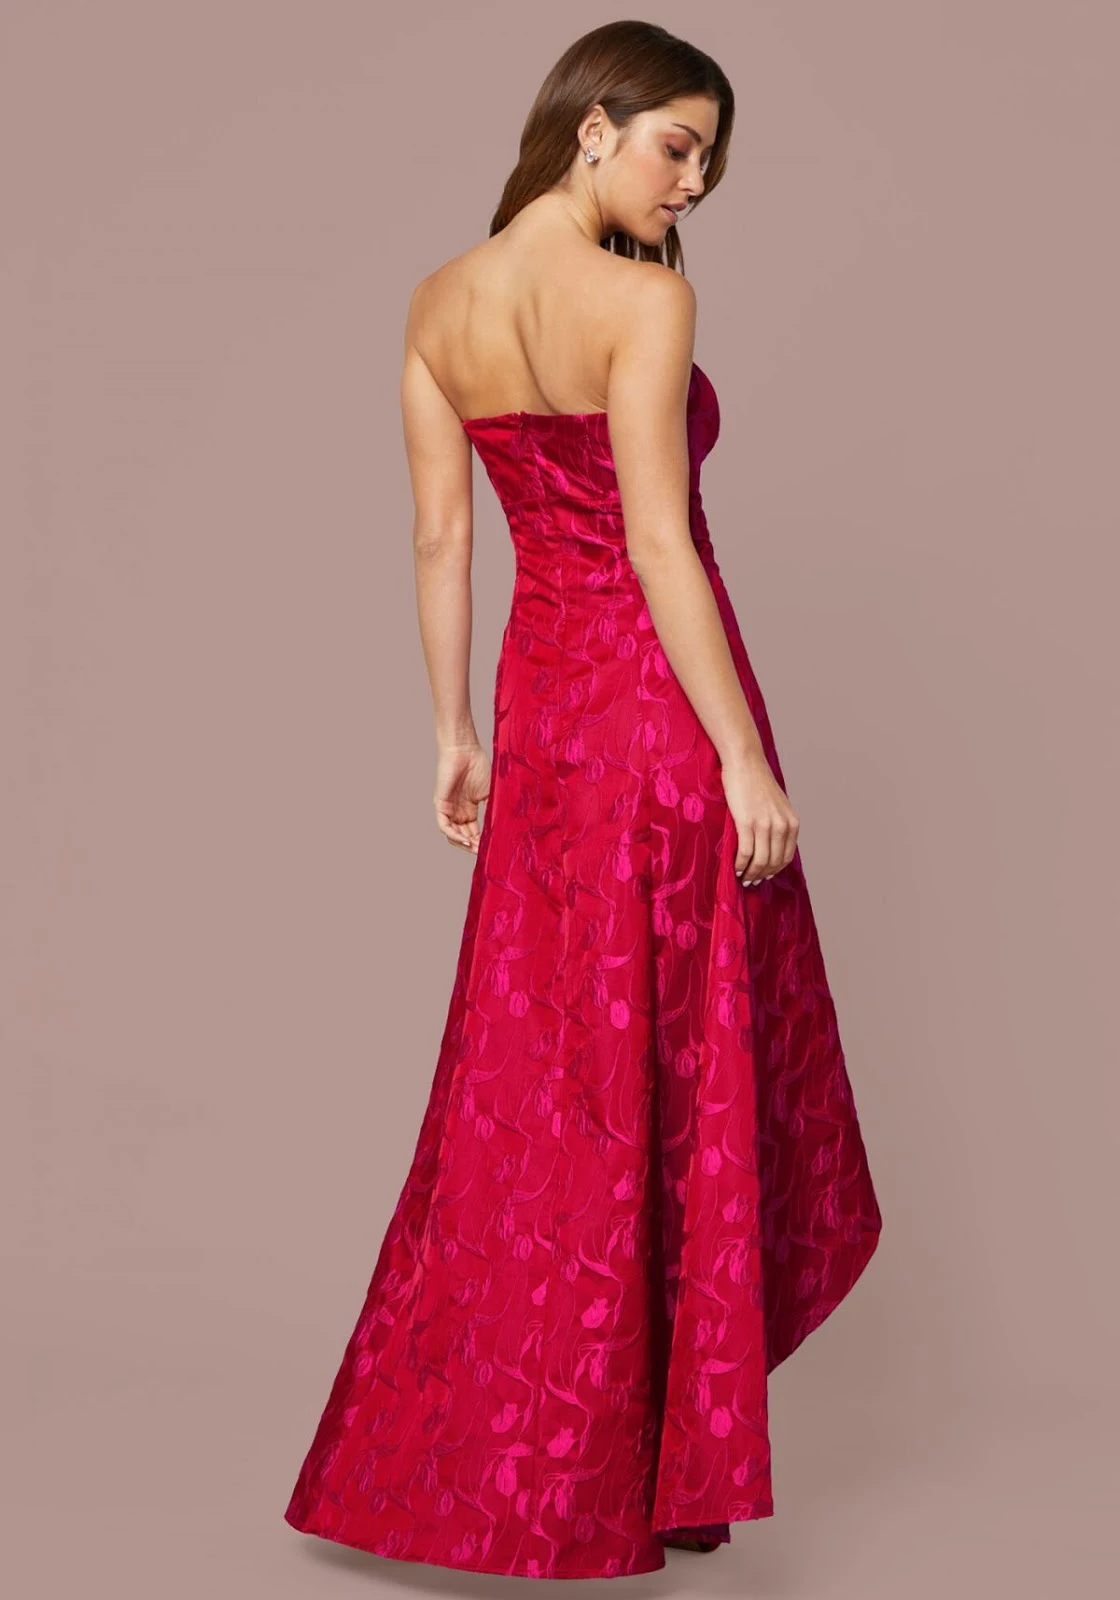 French Model Gigi Paris Hot Stills In Red Gown